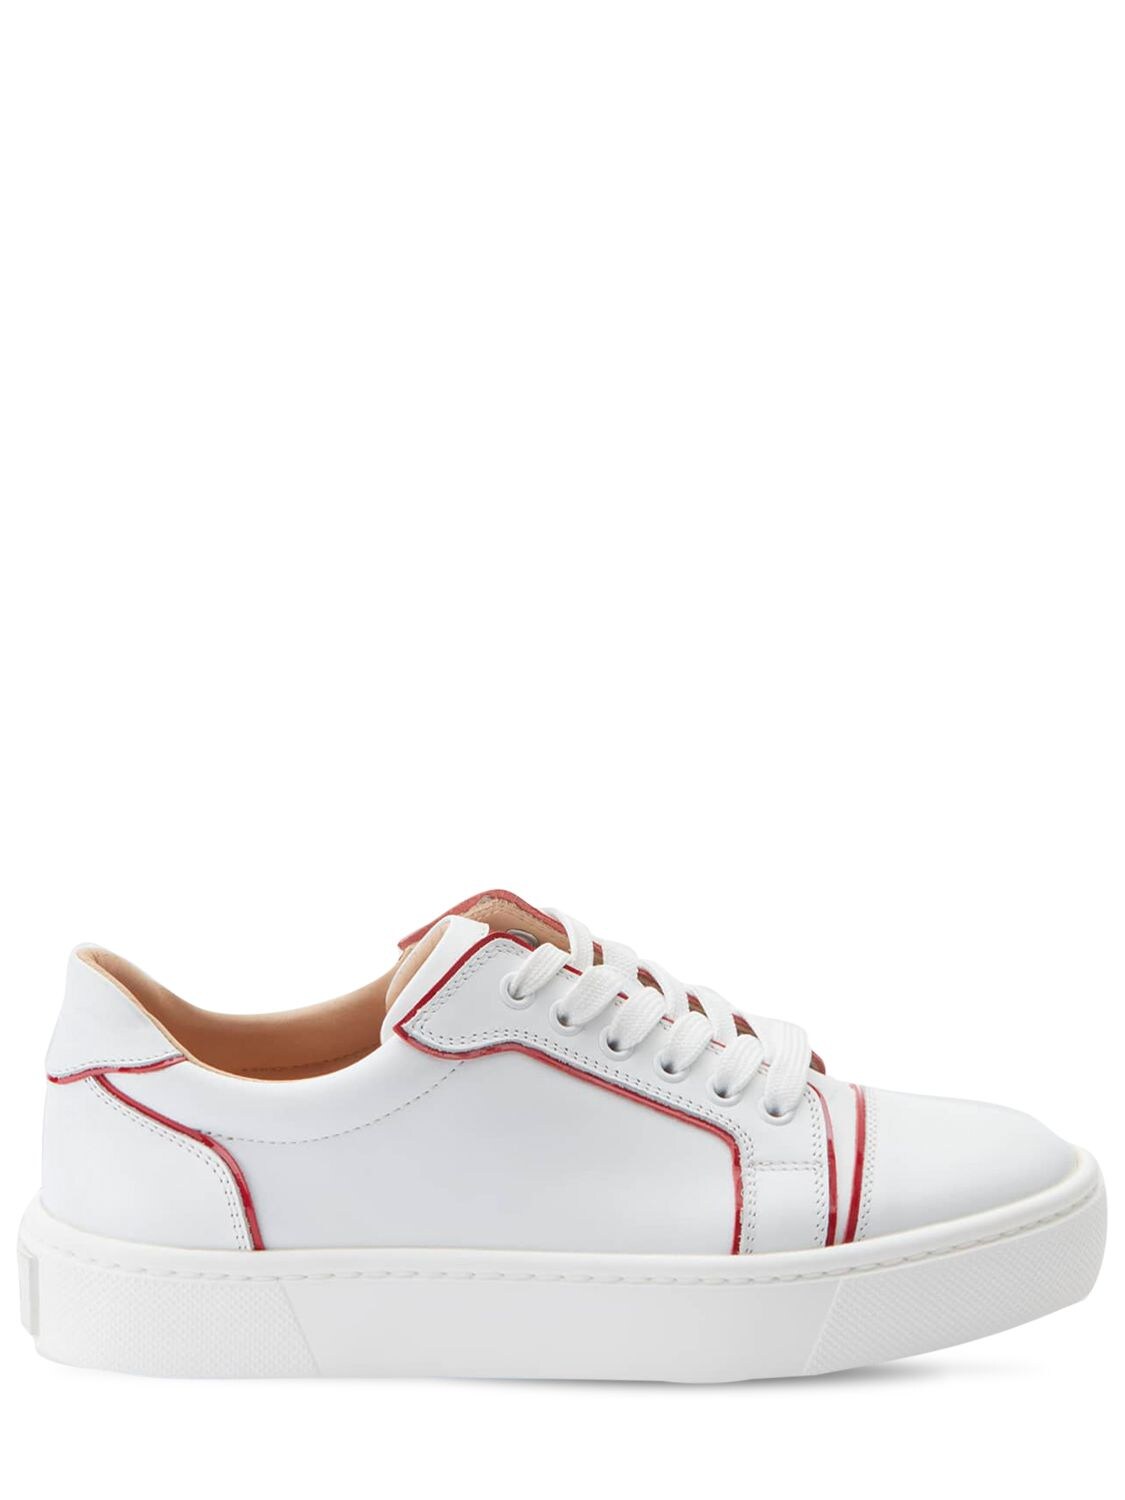 Christian Louboutin Vieirissima Two-tone Leather Sneakers In White/ Red ...